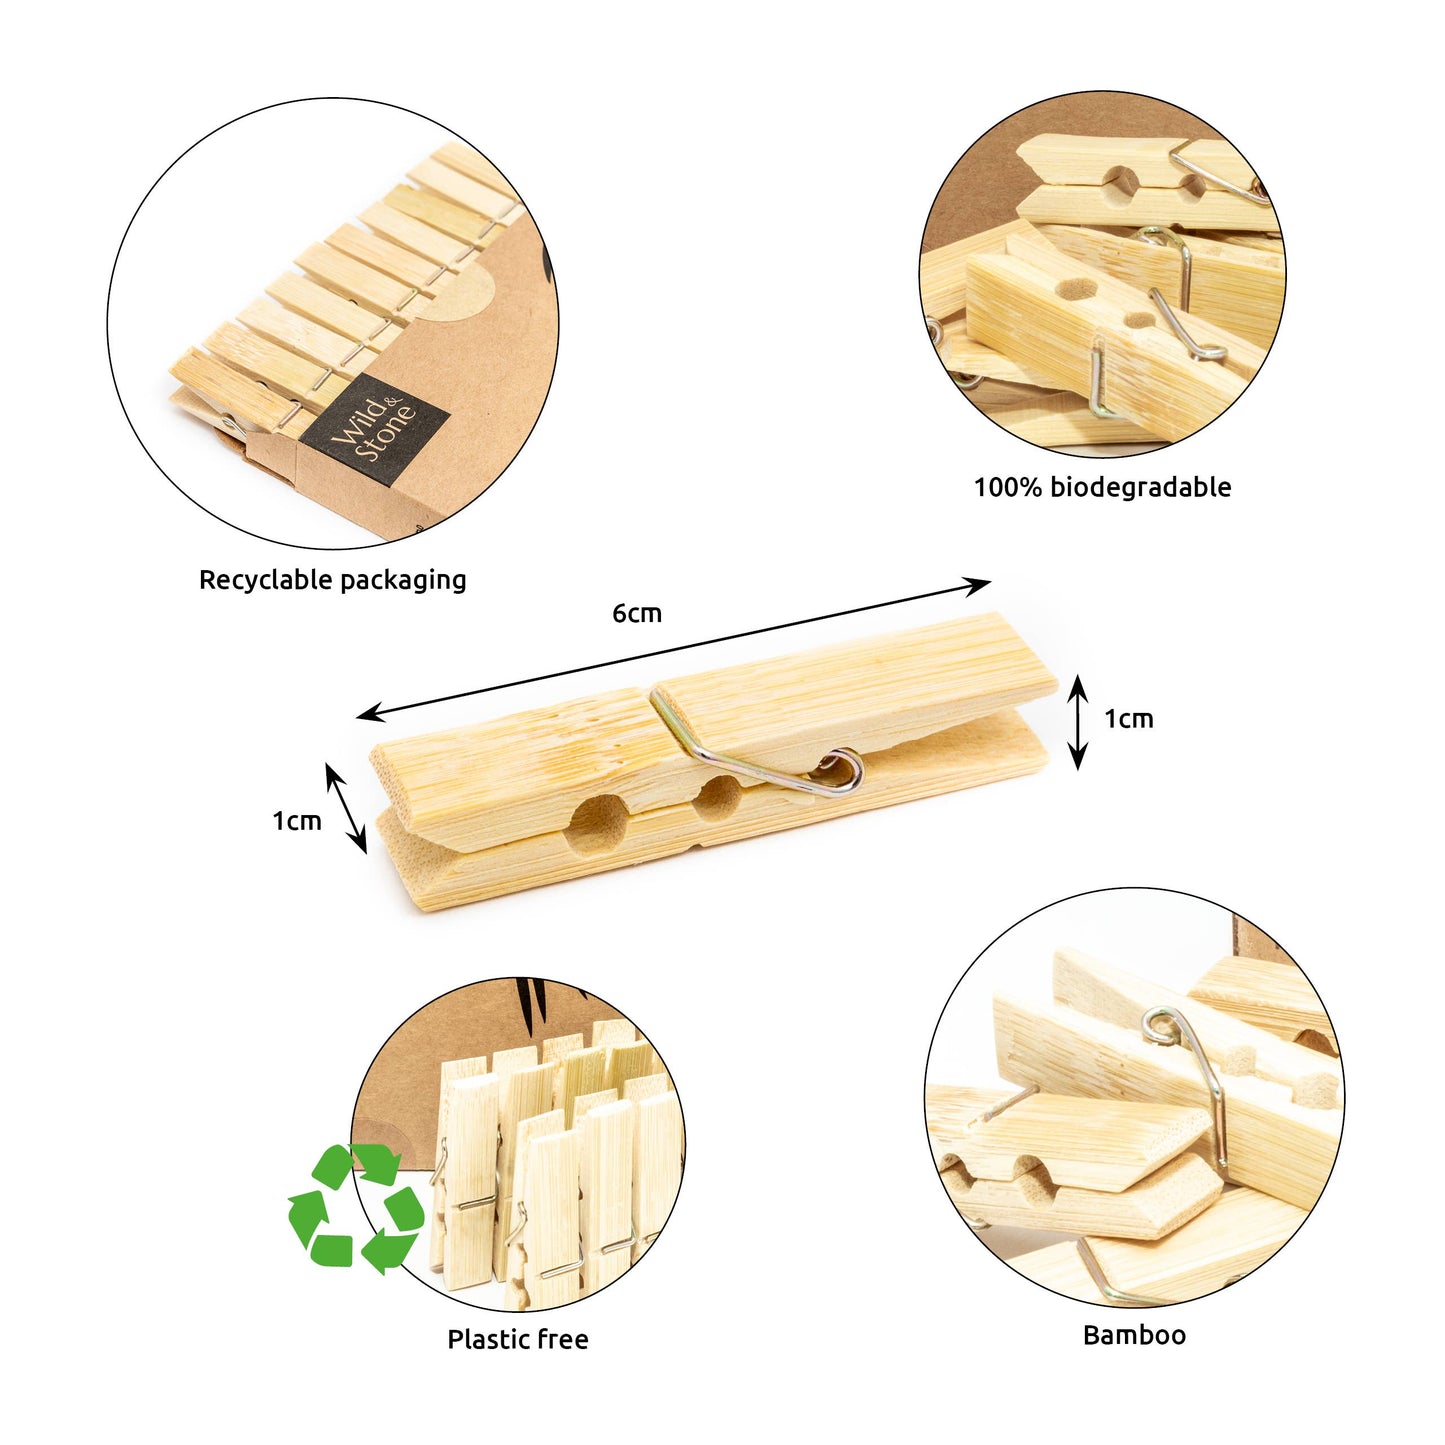 Bamboo Laundry Pegs - Biodegradable & Vegan - 20 Pack